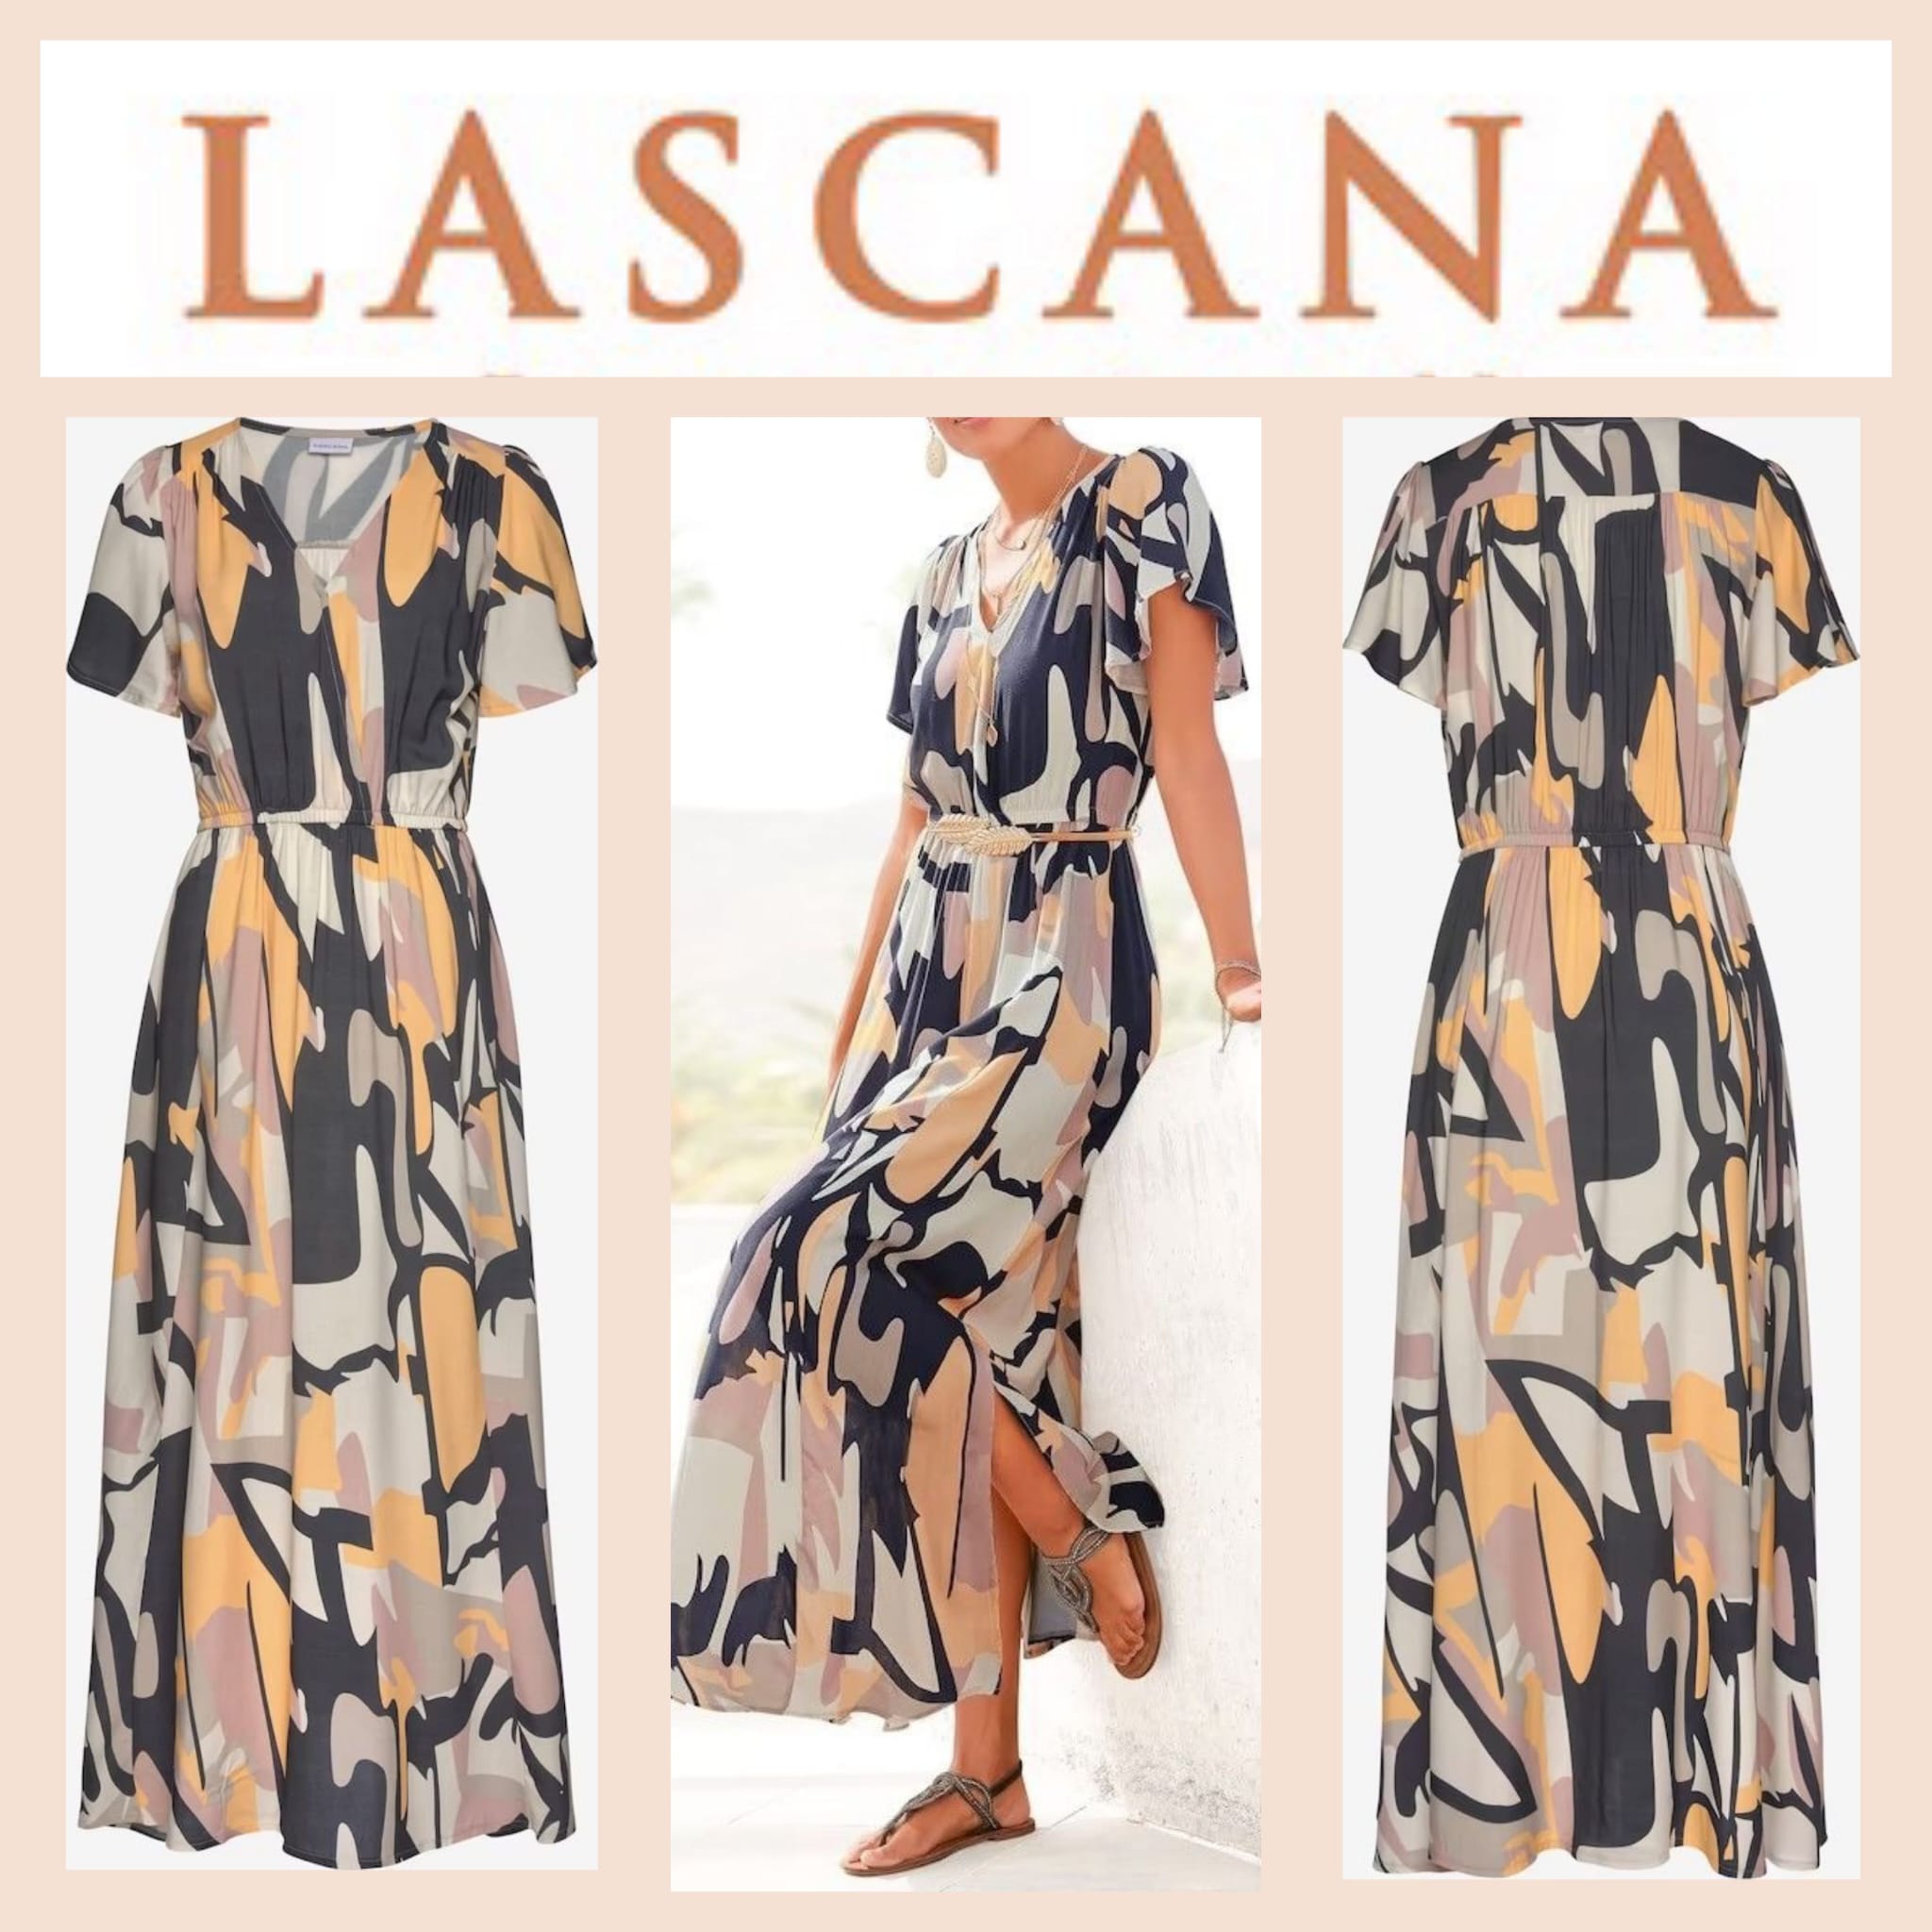 Long dress from Lascana